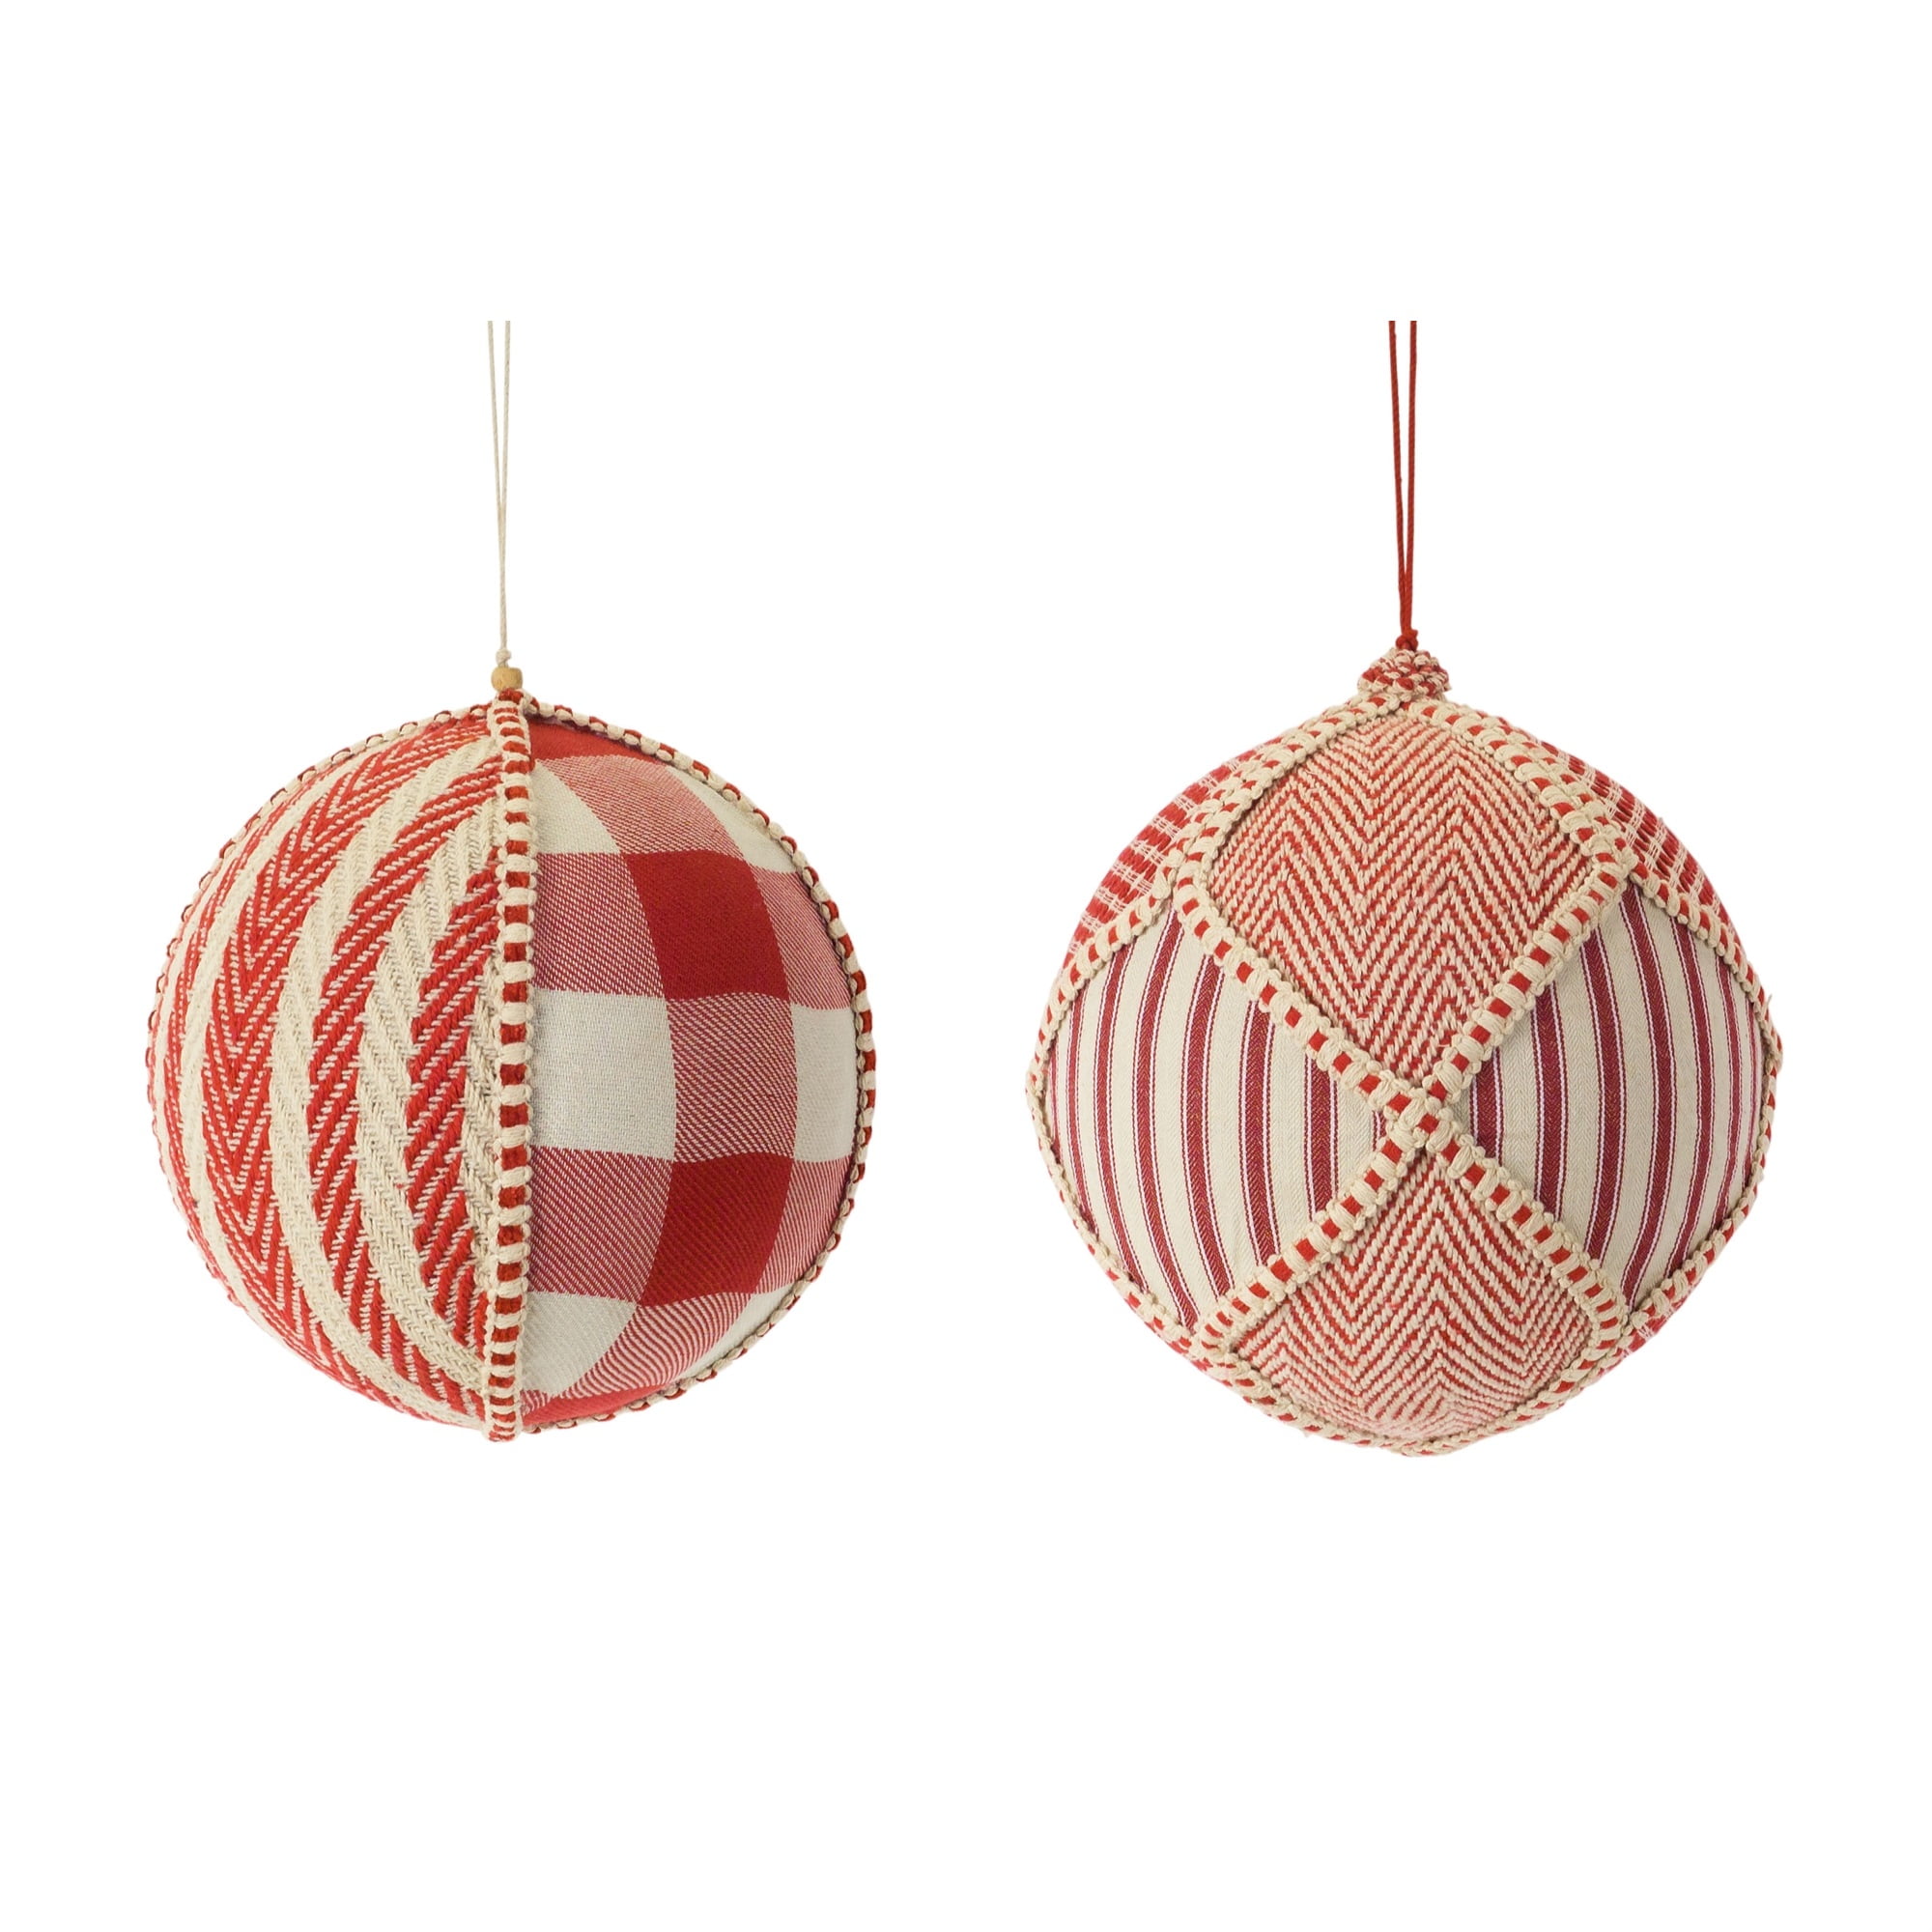 Ball Ornament (Set of 2) 8.5"H Plastic/Fabric